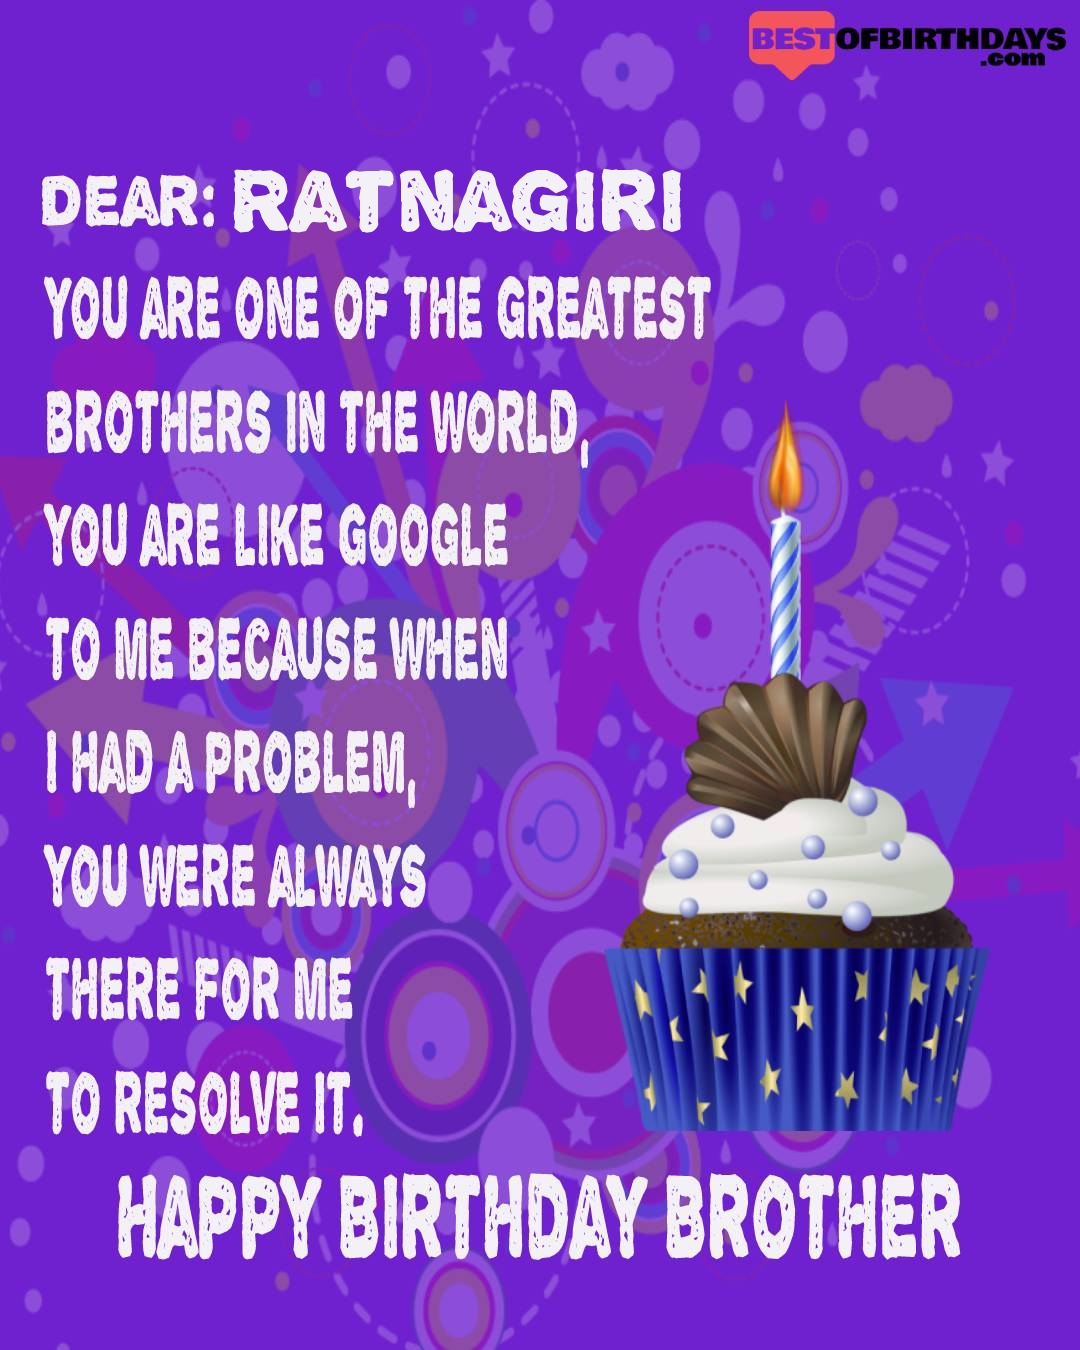 Happy birthday ratnagiri bhai brother bro